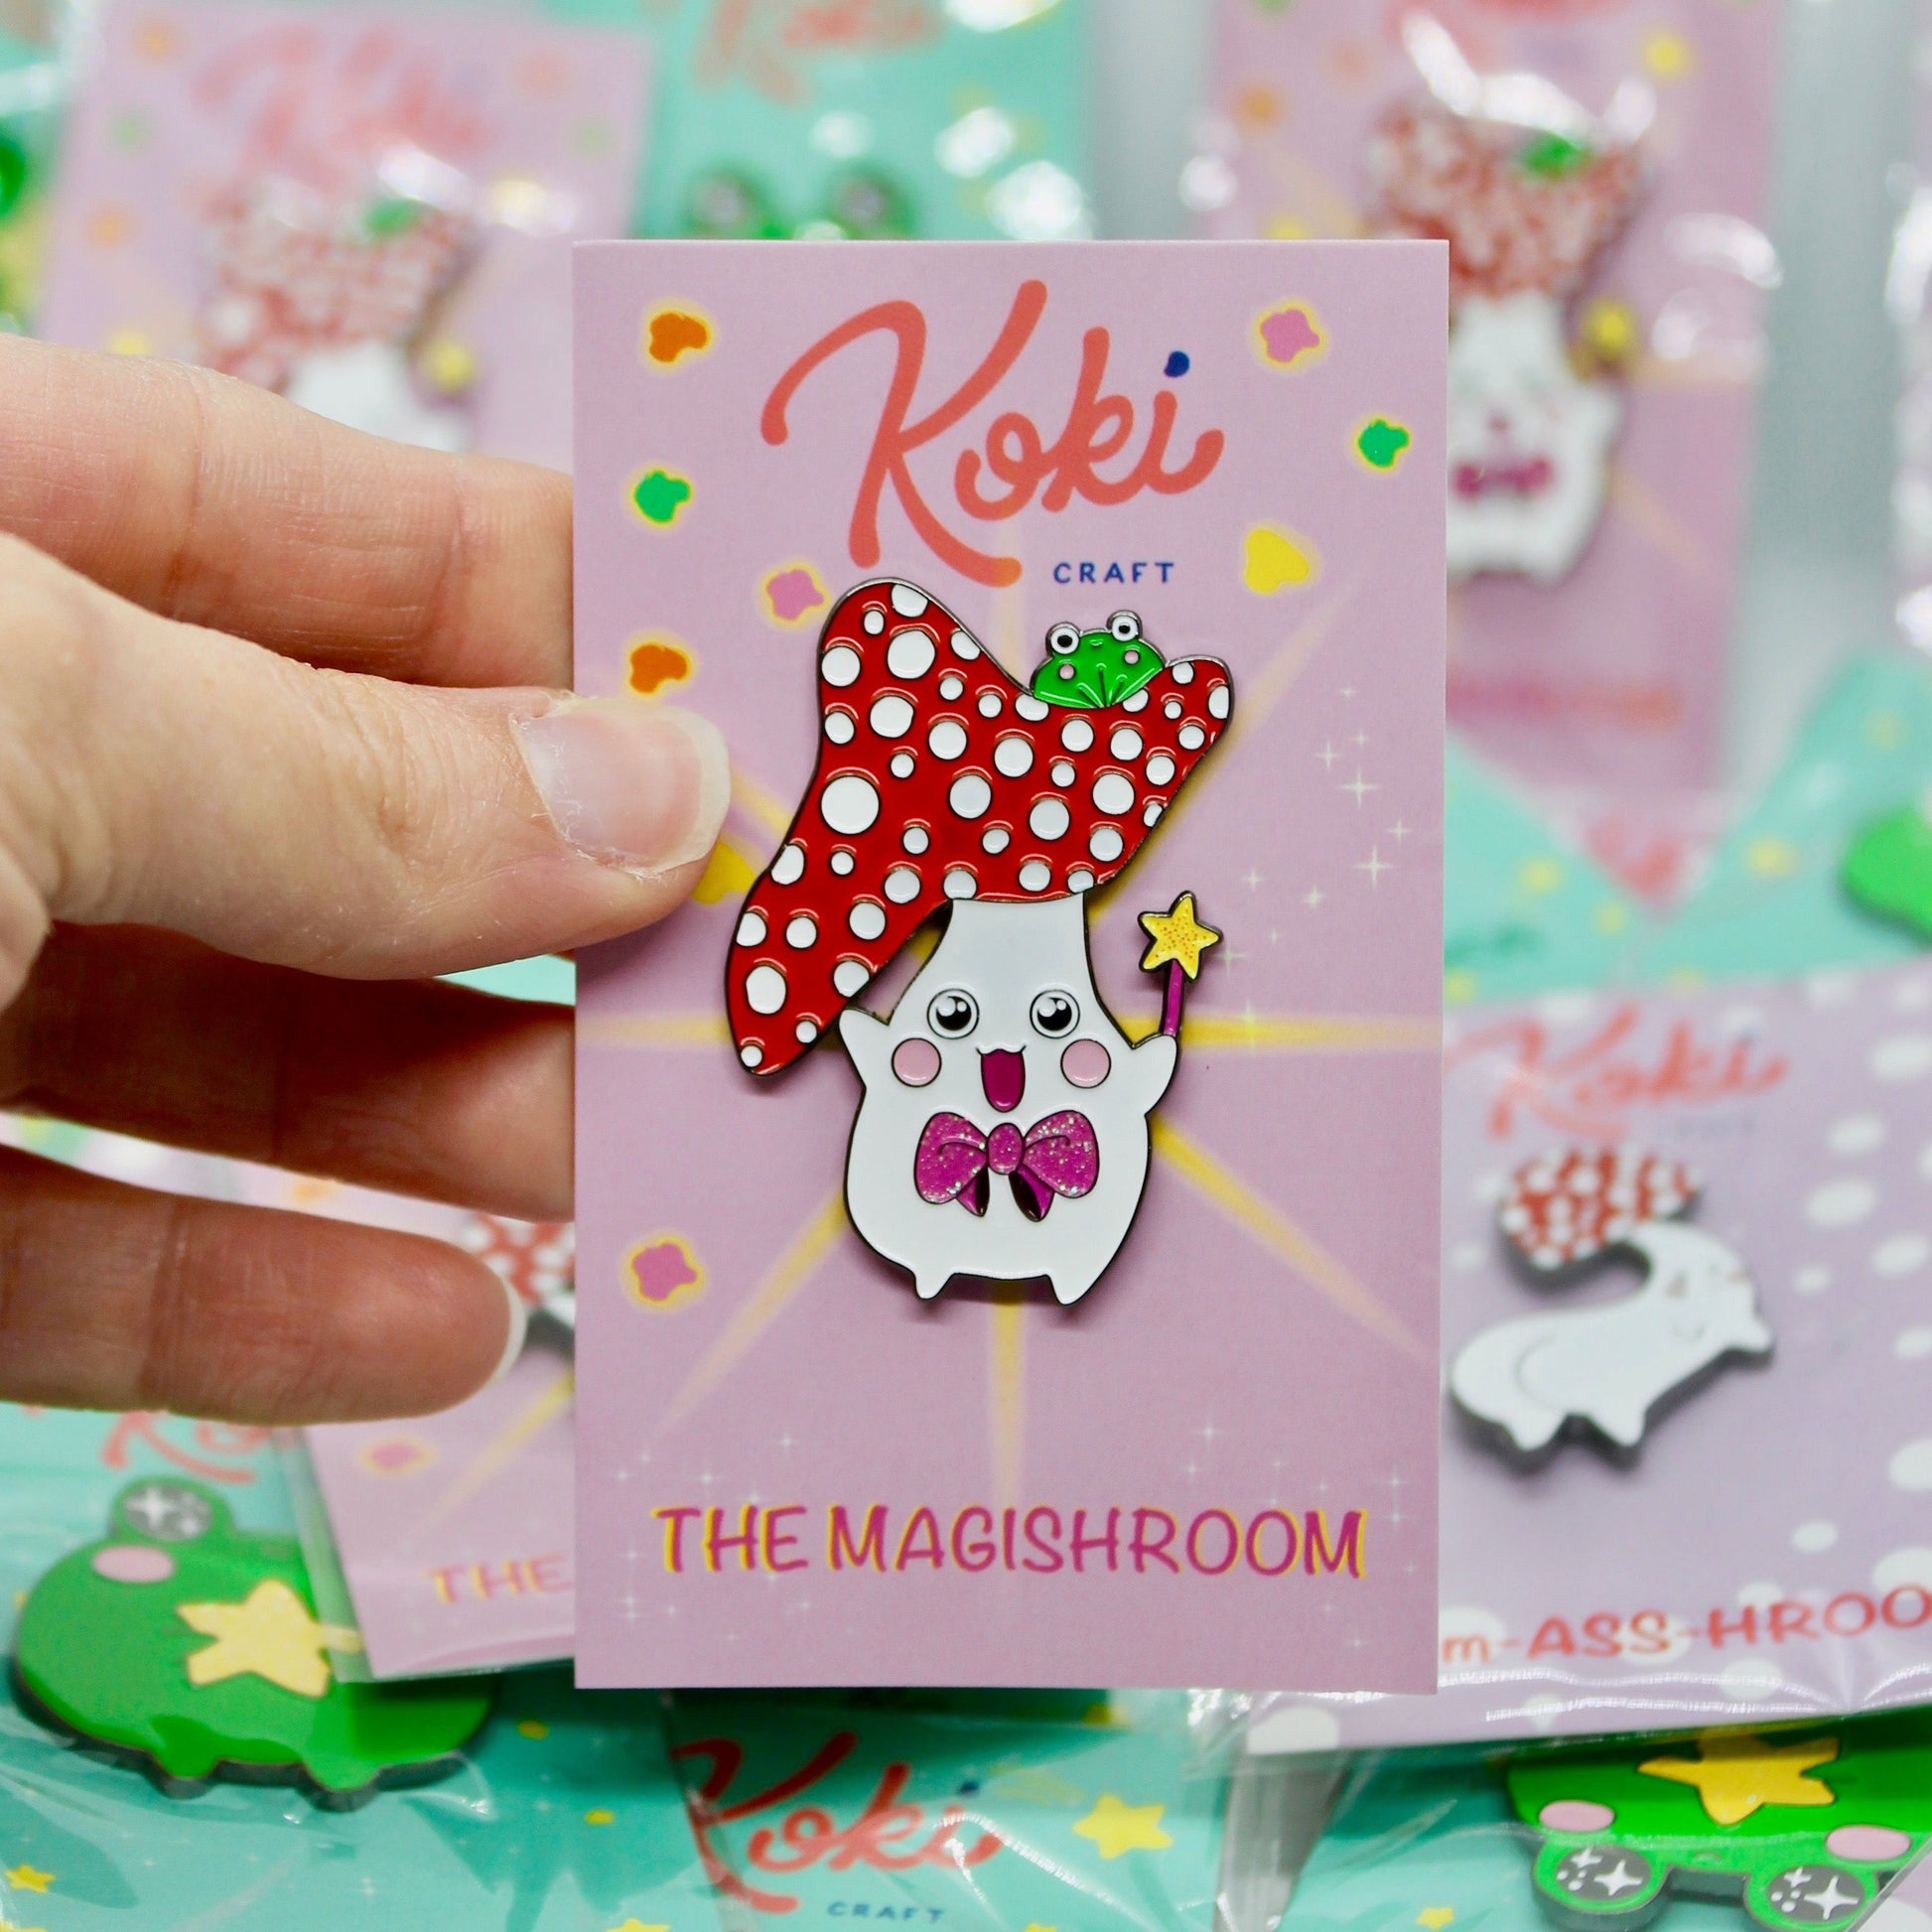 Mushroom Pin on Backing Card with "Koki Craft THE MAGISHROOM" Text